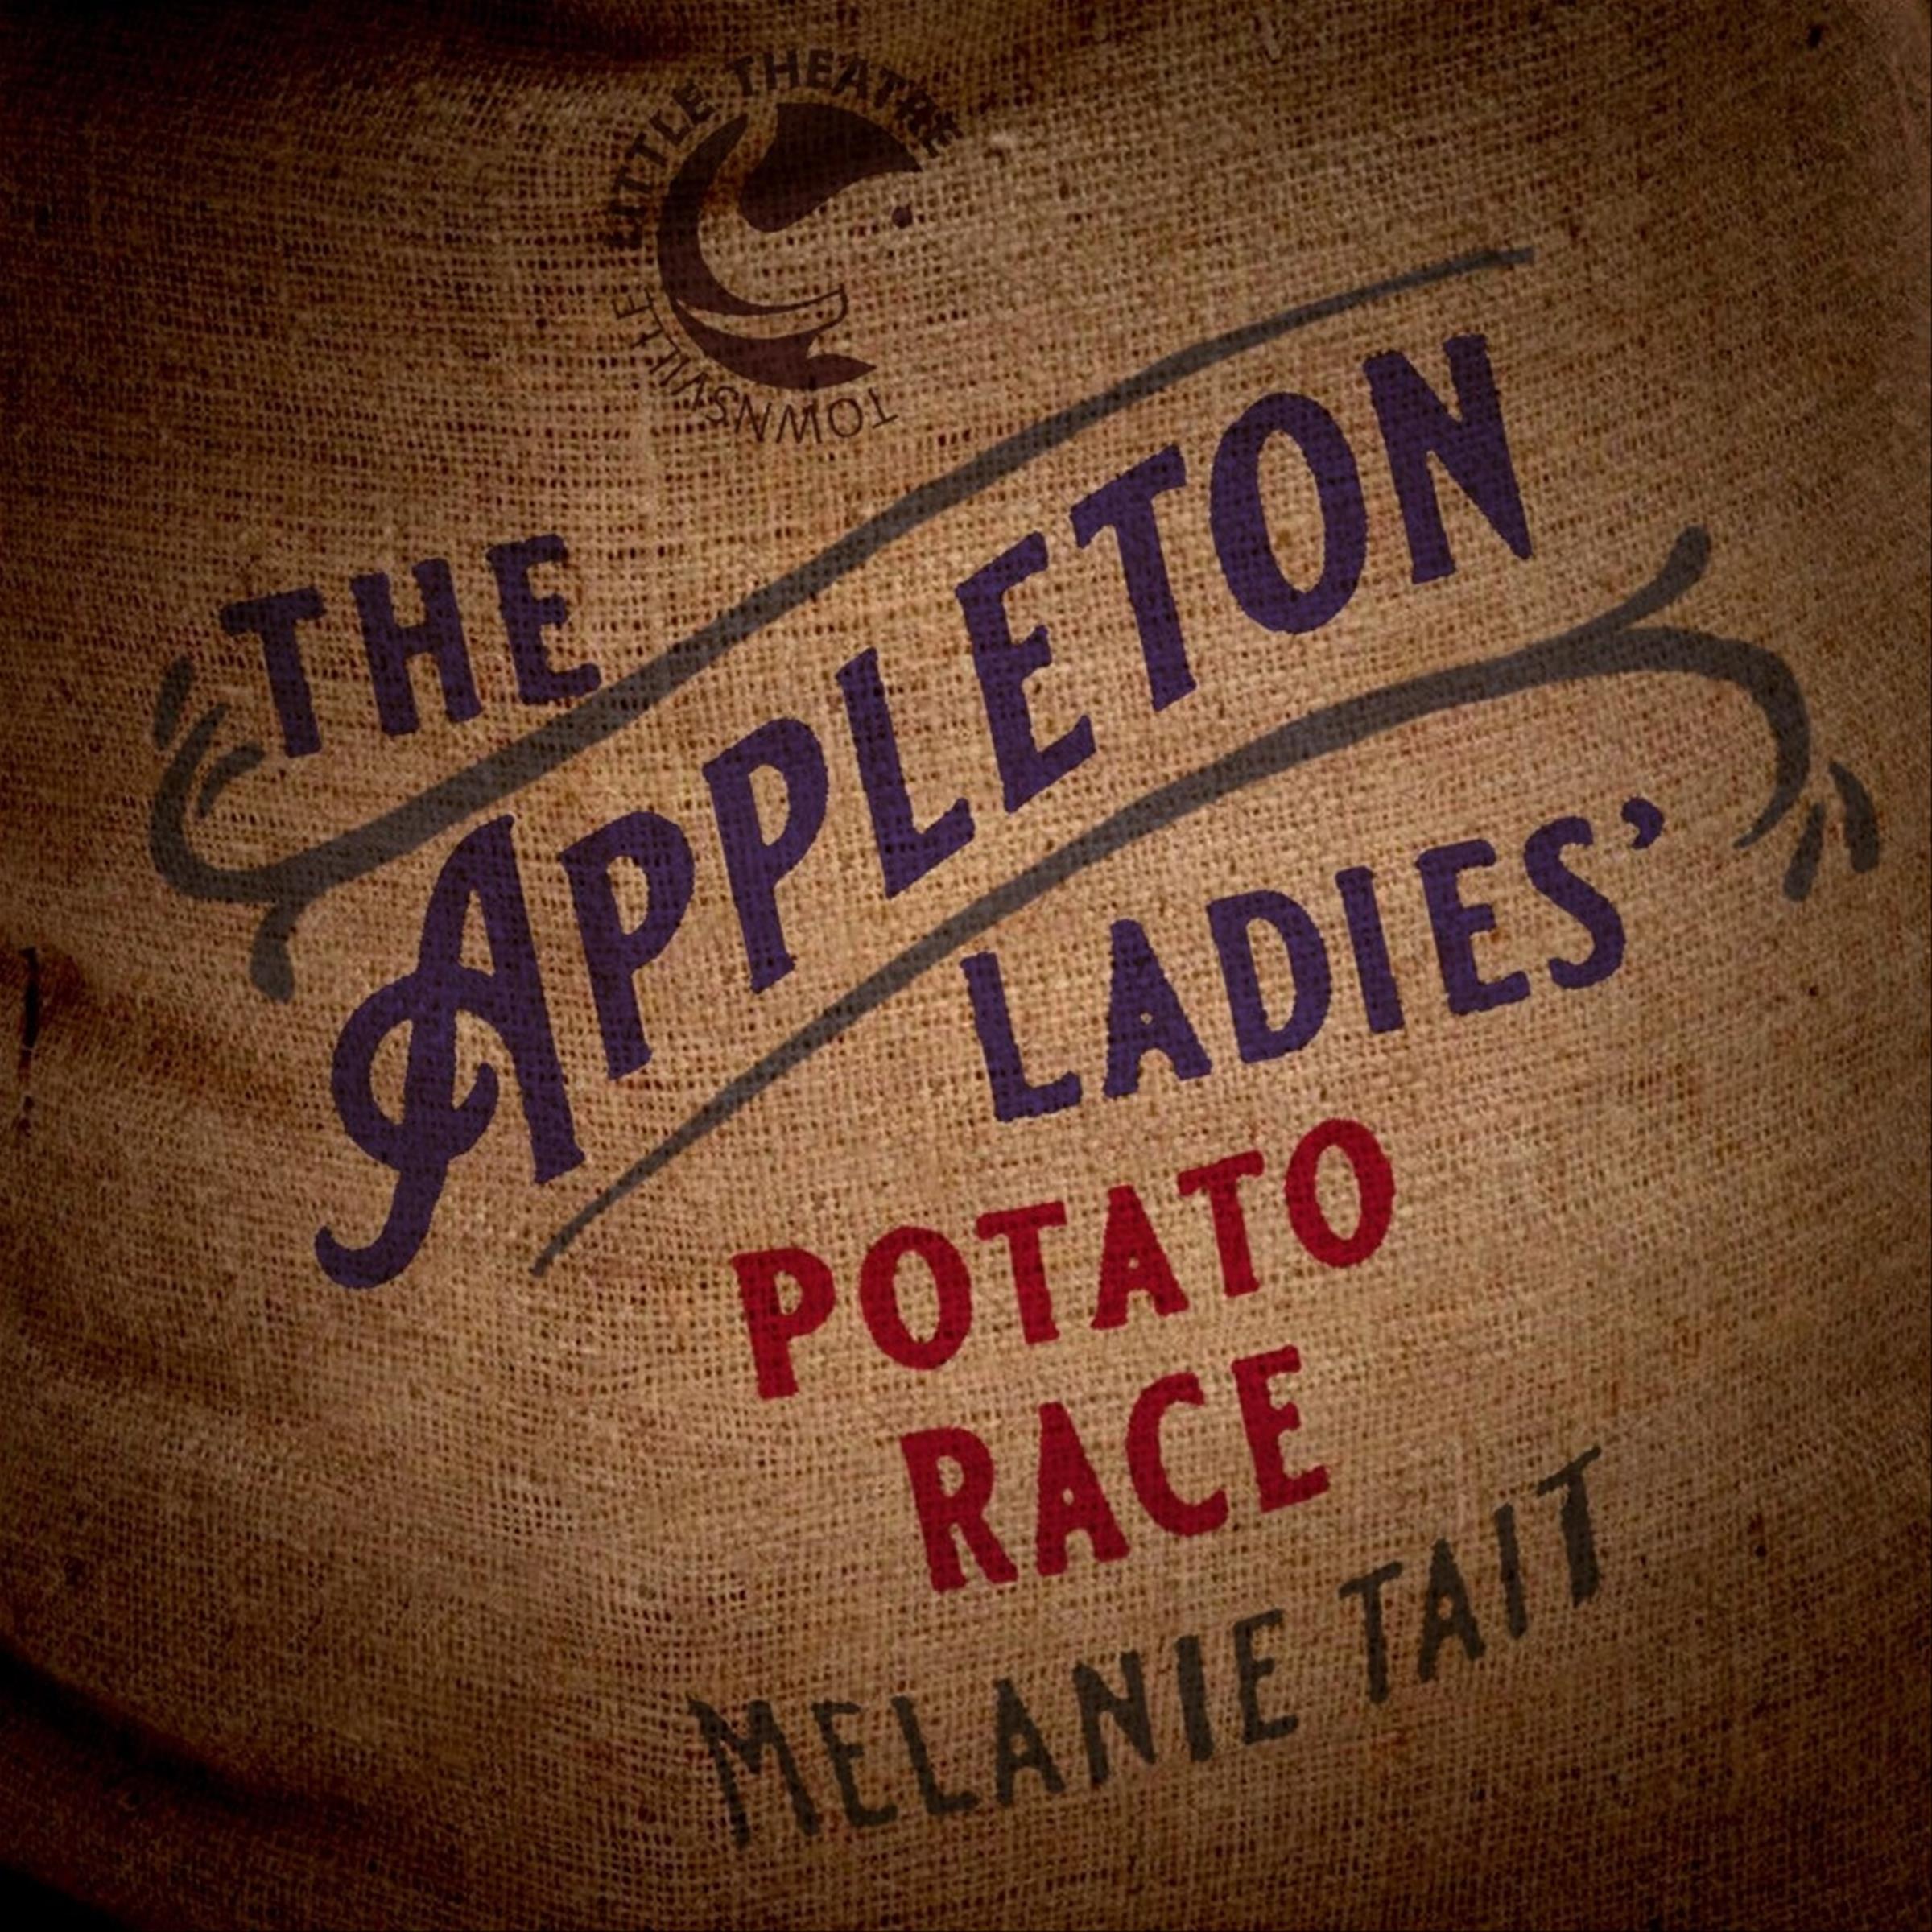 The Appleton Ladies Potato Race